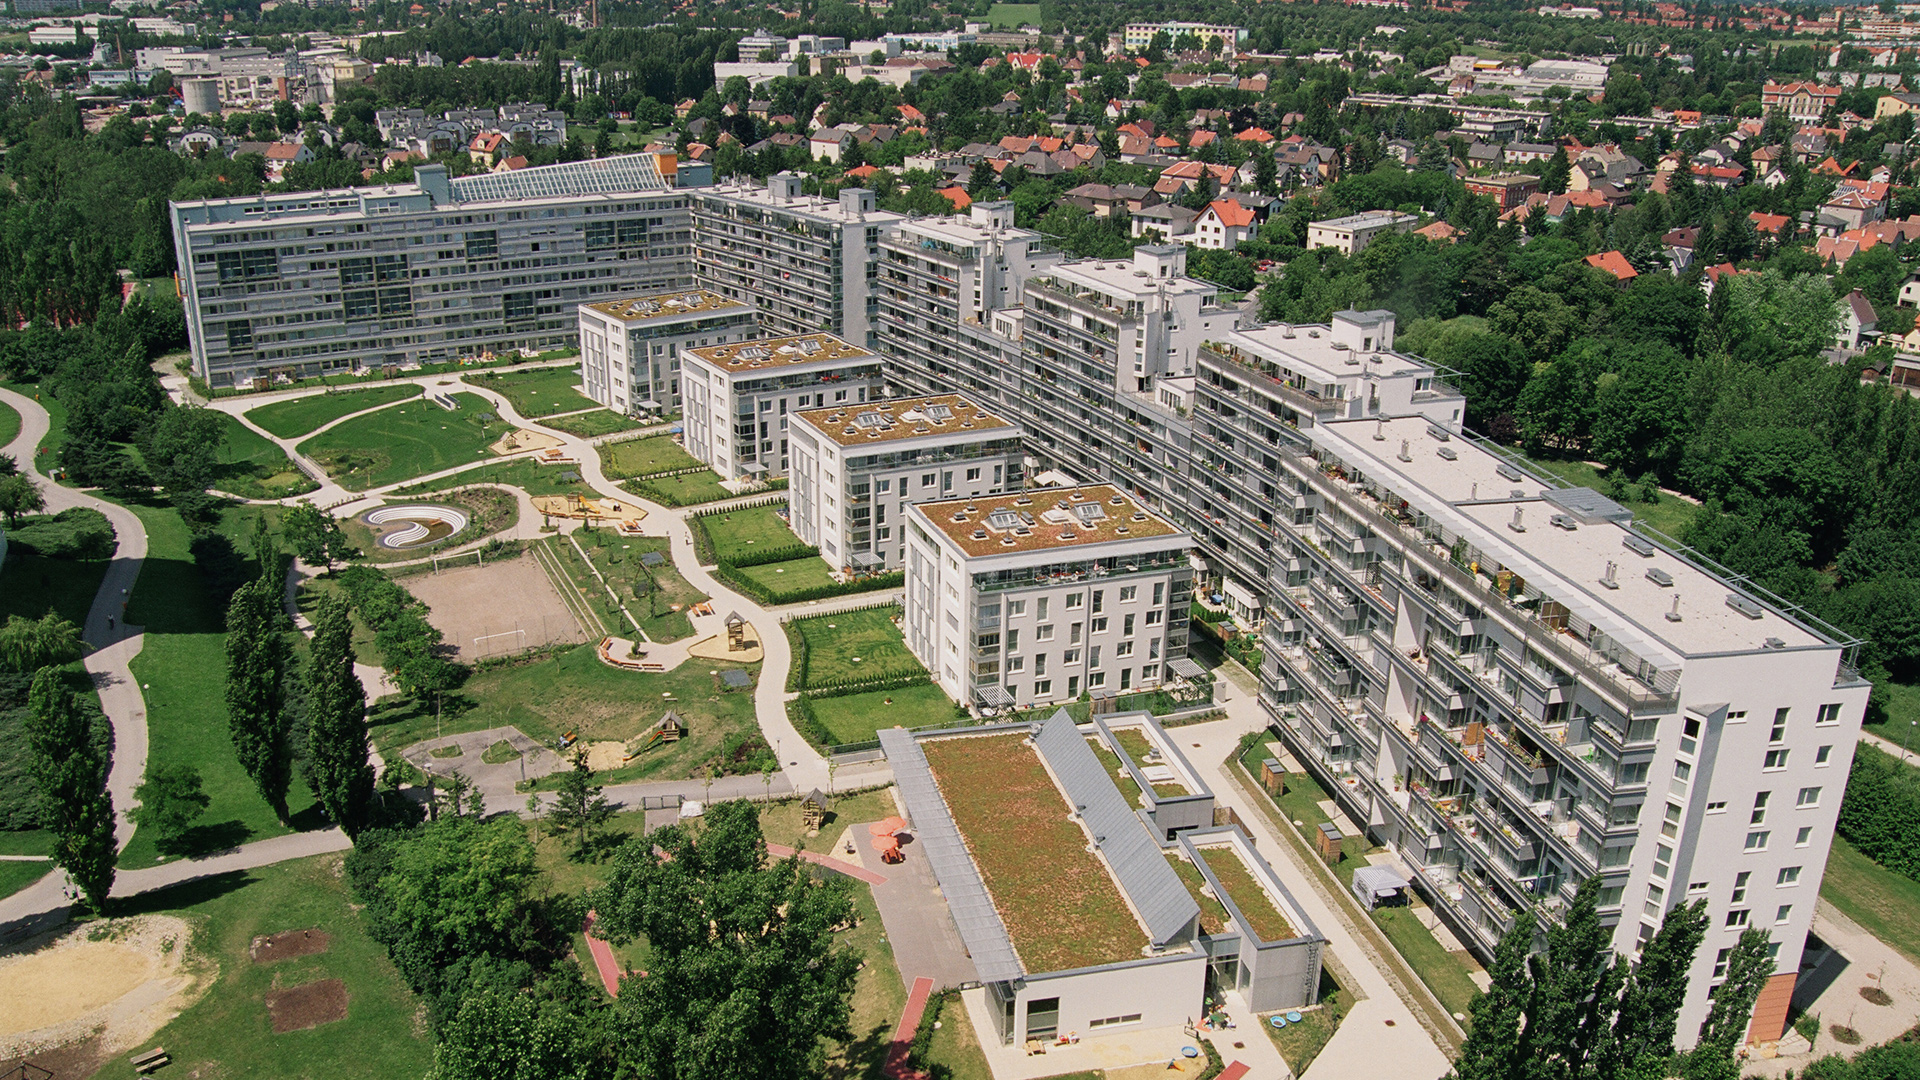 Municipal housing estate